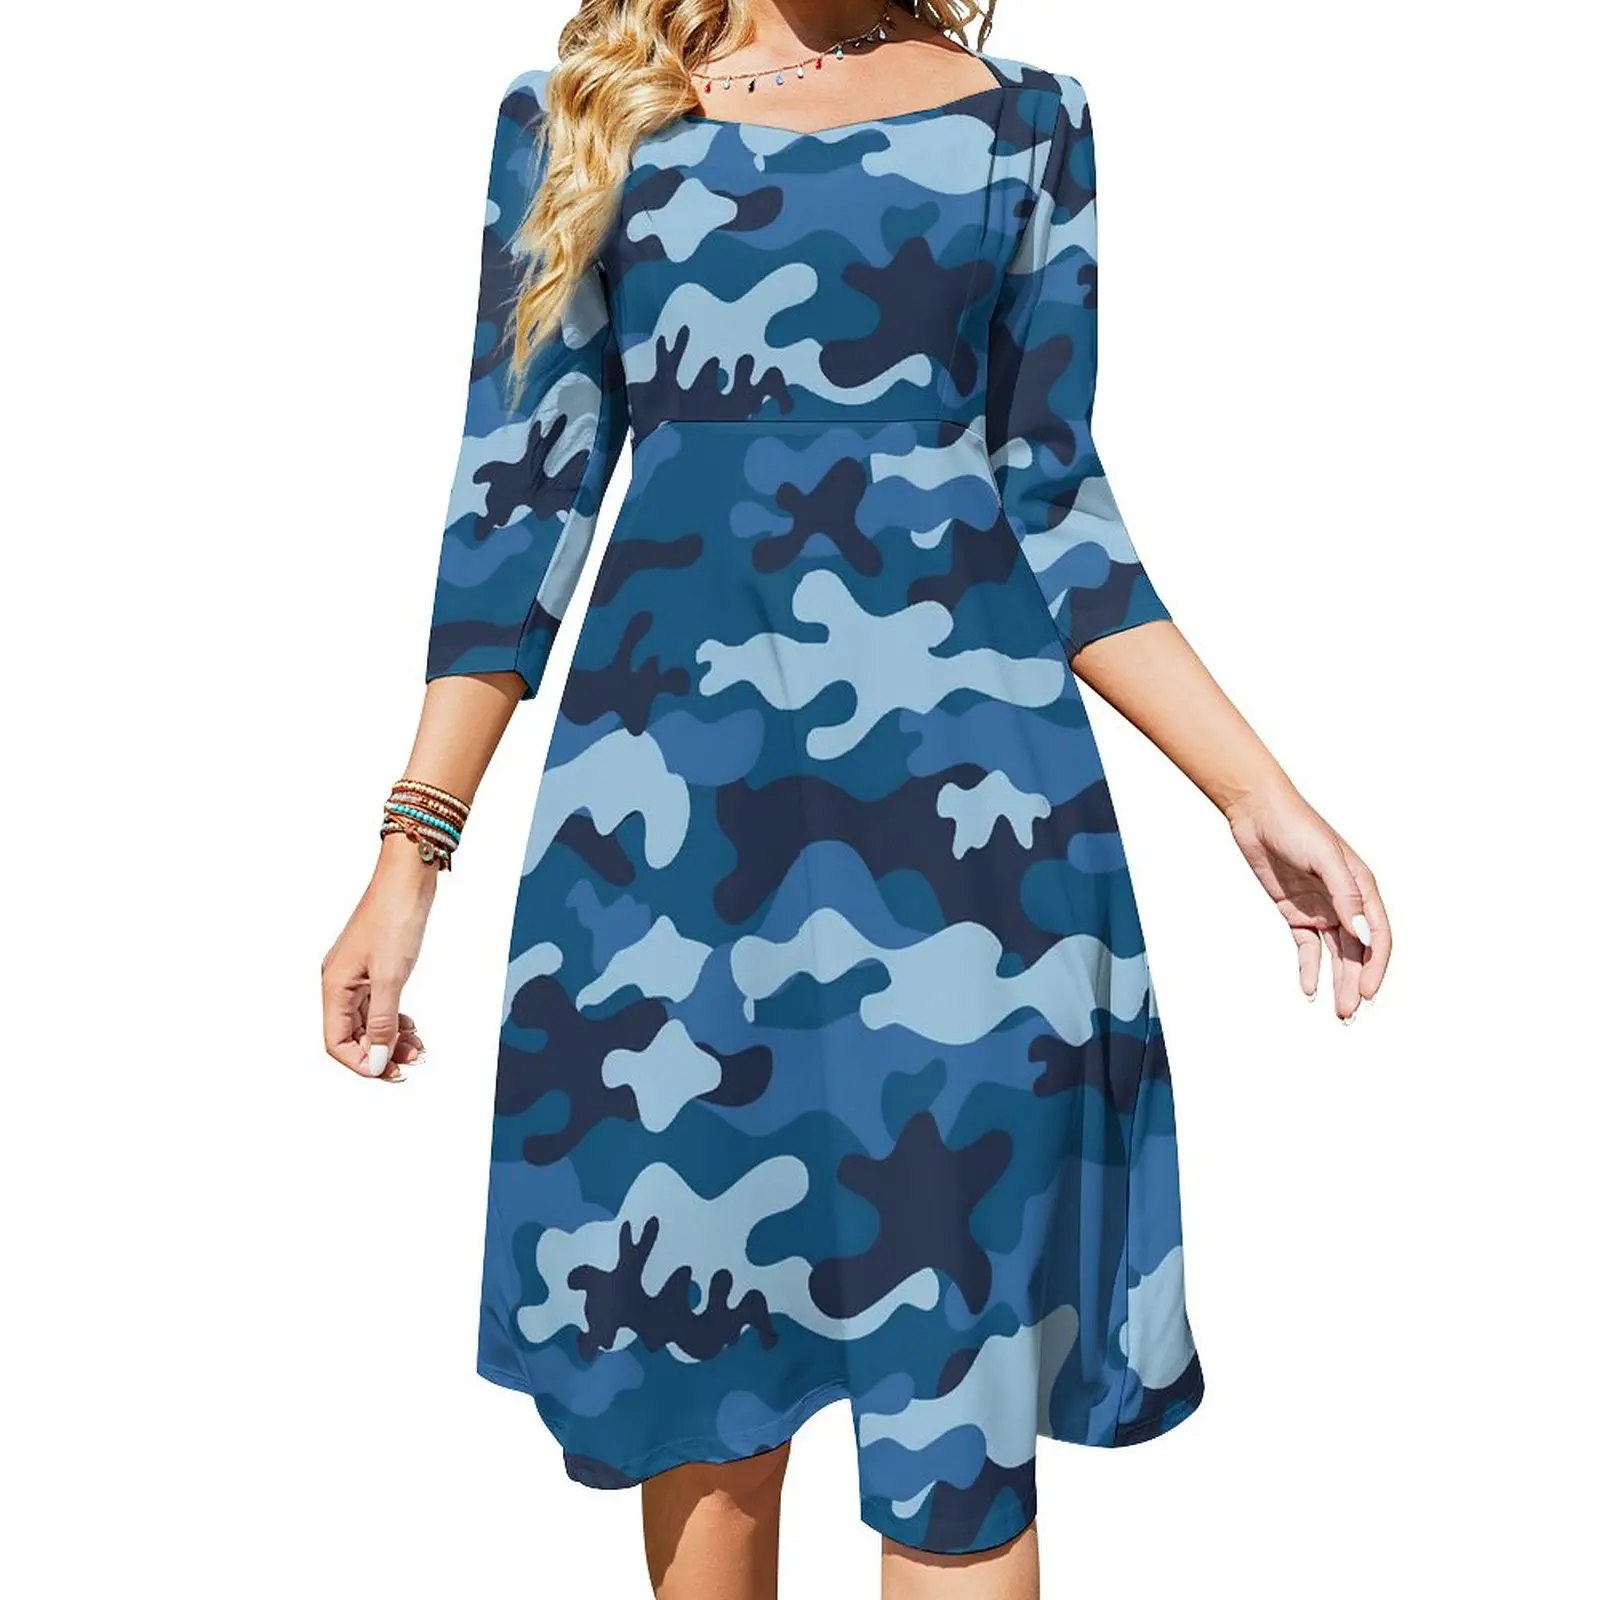 

Blue Camouflage Dress Summer Army Camo Elegant Dresses Woman Three Quarter Stylish Graphic Oversized Casual Dress